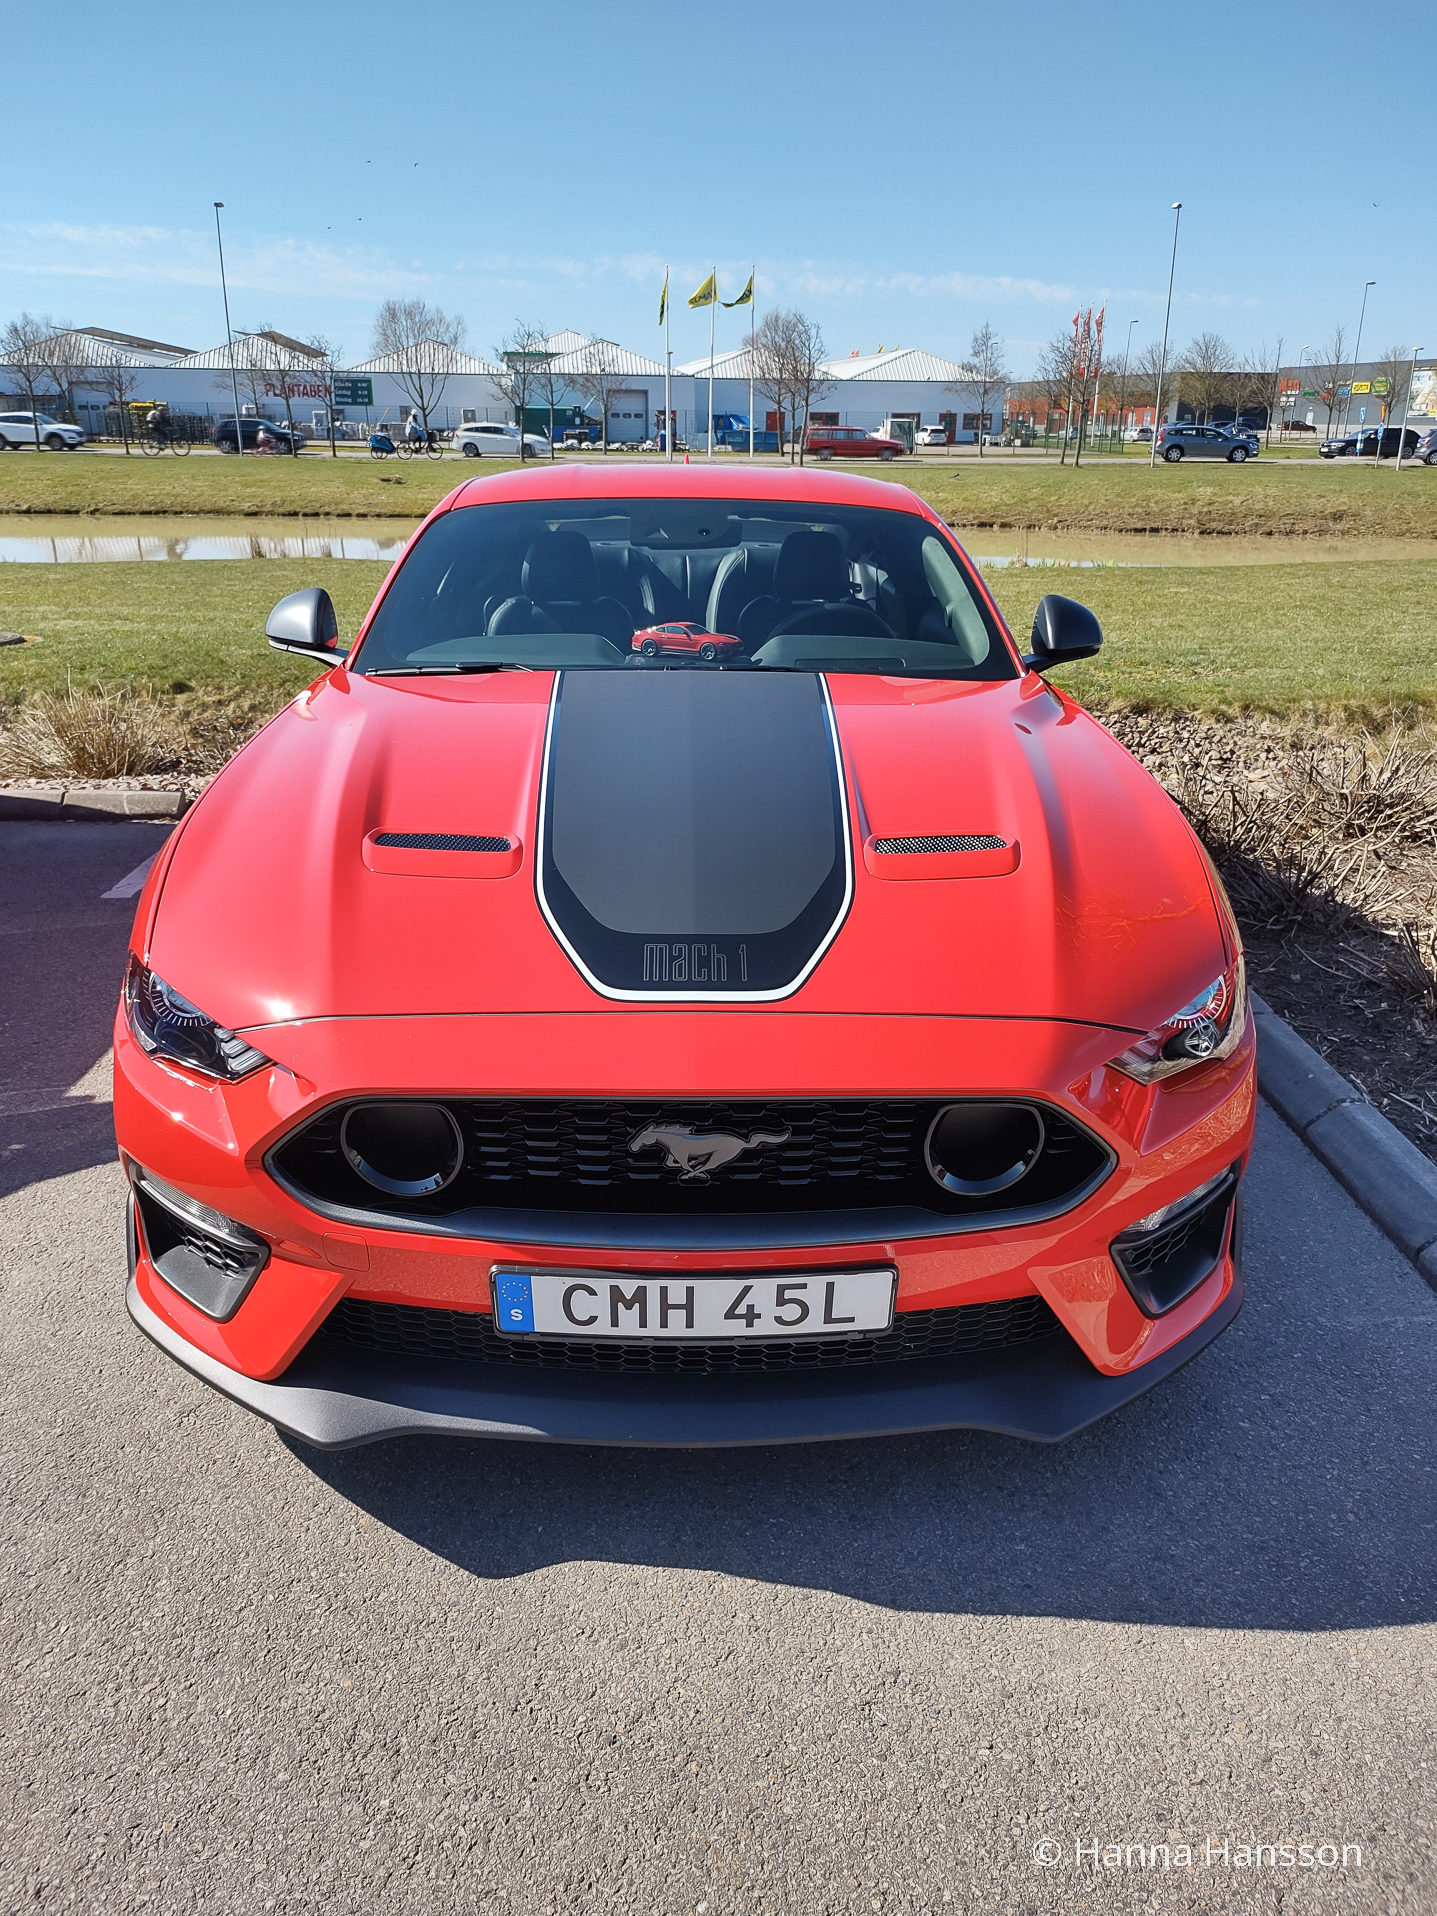 En röd Mustang Mach 1